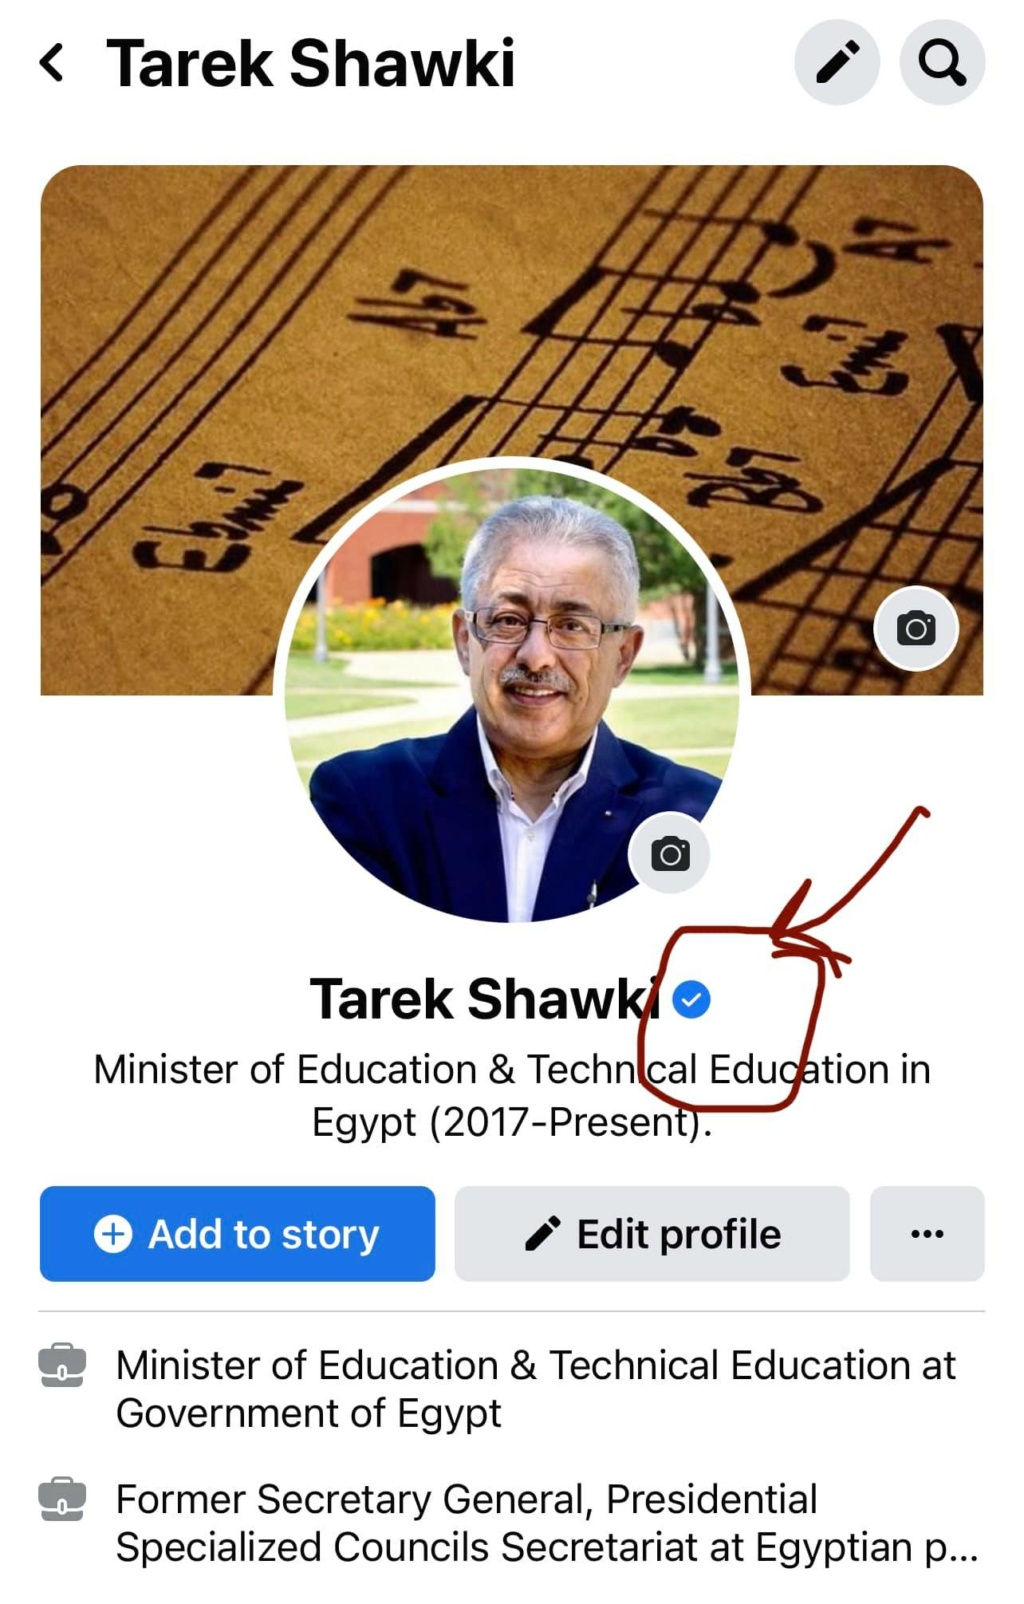 Tarek Shawki | الصفحة الرسمية لوزير التربية والتعليم 11112